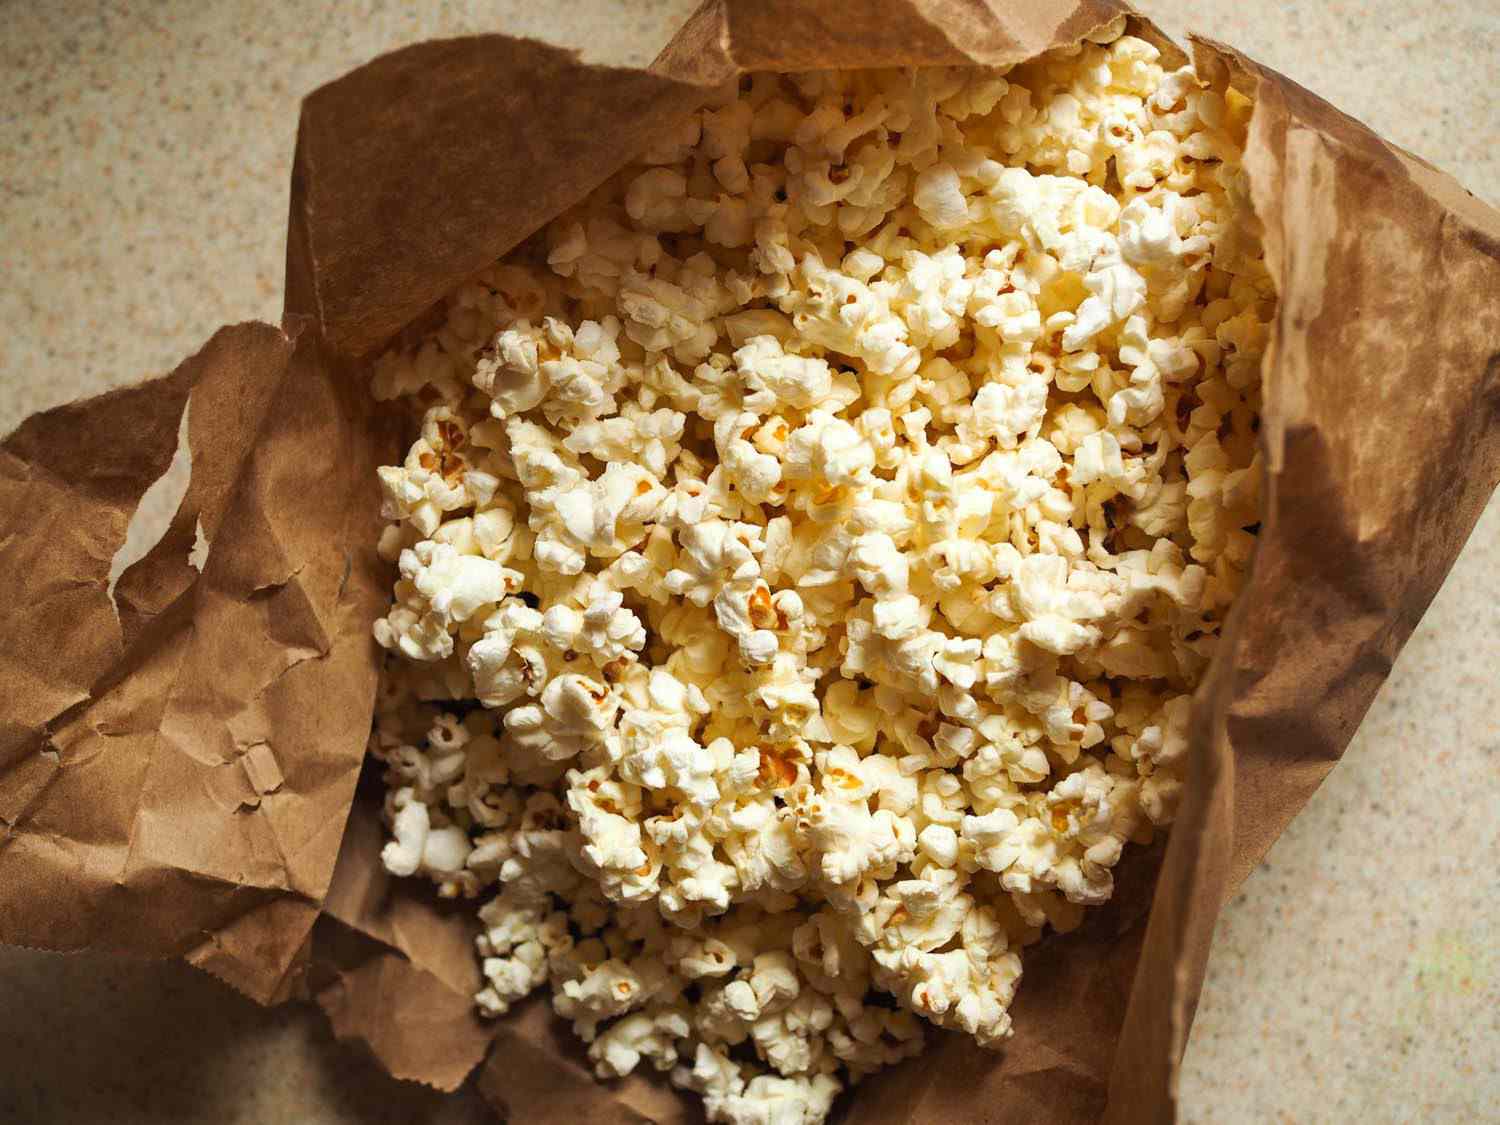 Popcorn in a brown paper bag